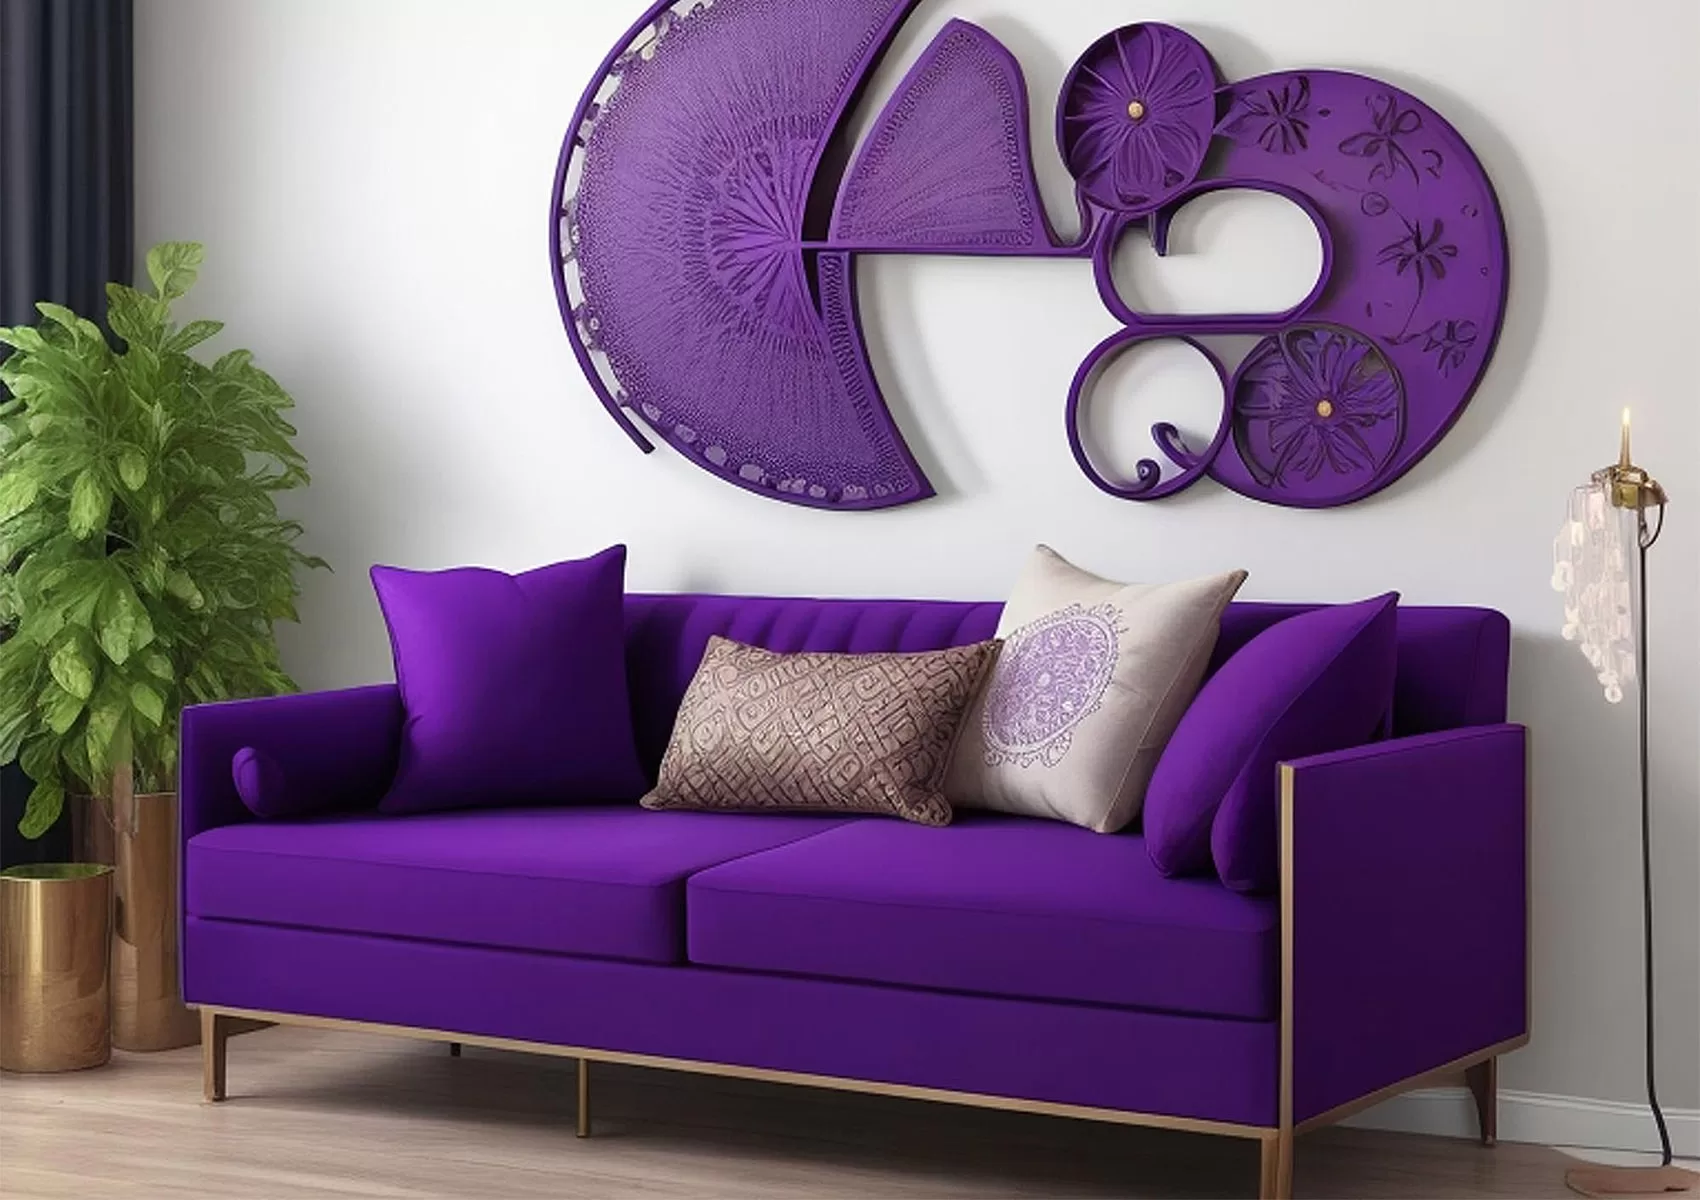 Purple Sofa: Elegance with Sophistication